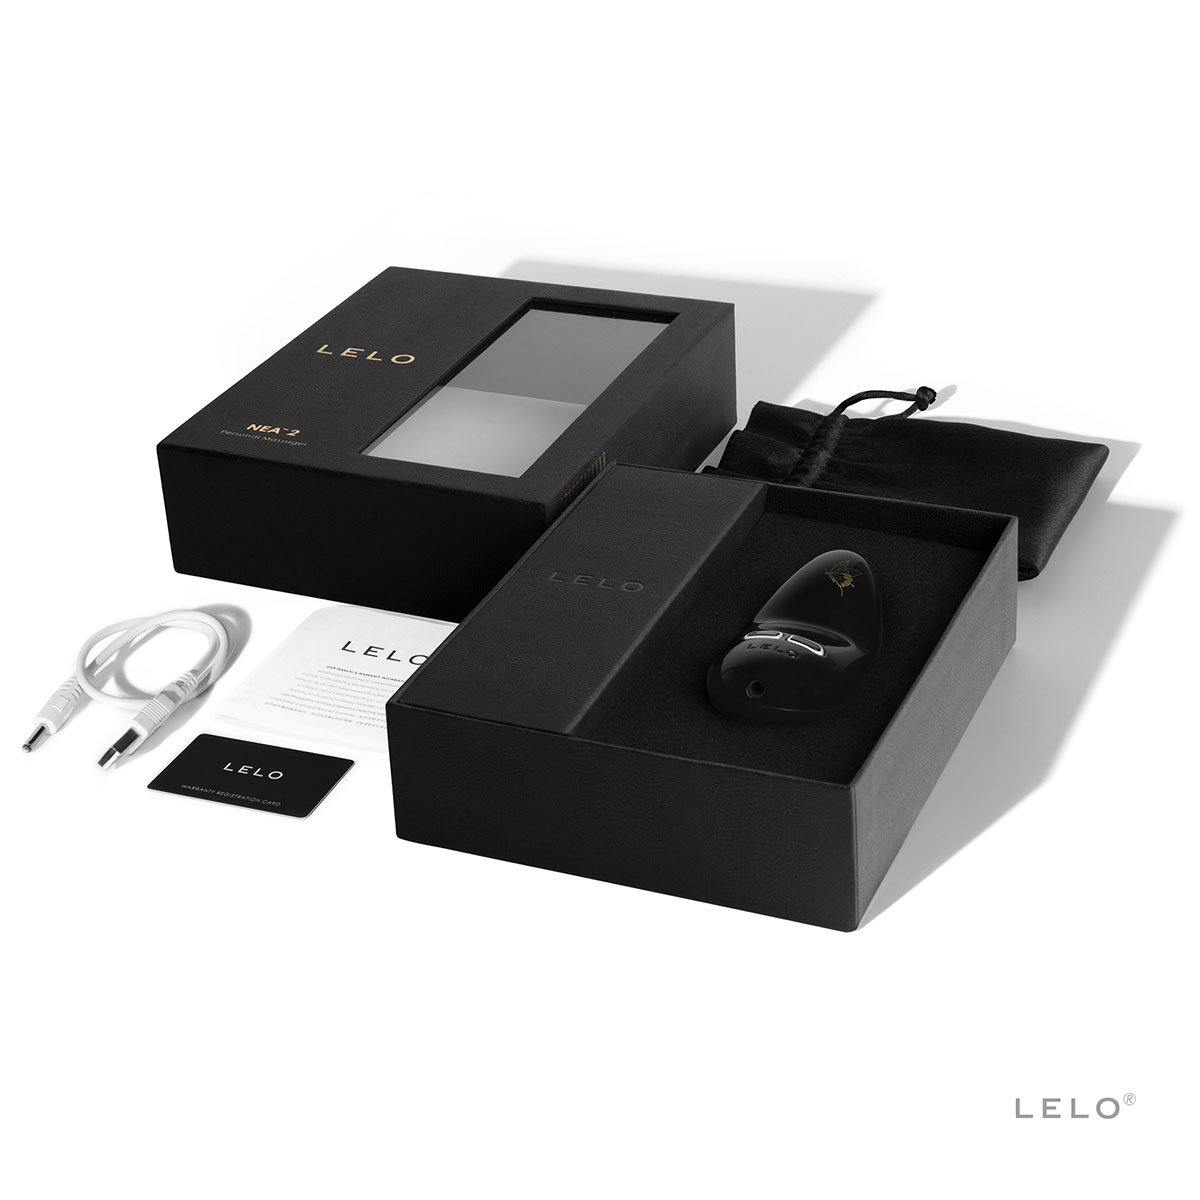 Lelo Nea 2 - Buy At Luxury Toy X - Free 3-Day Shipping